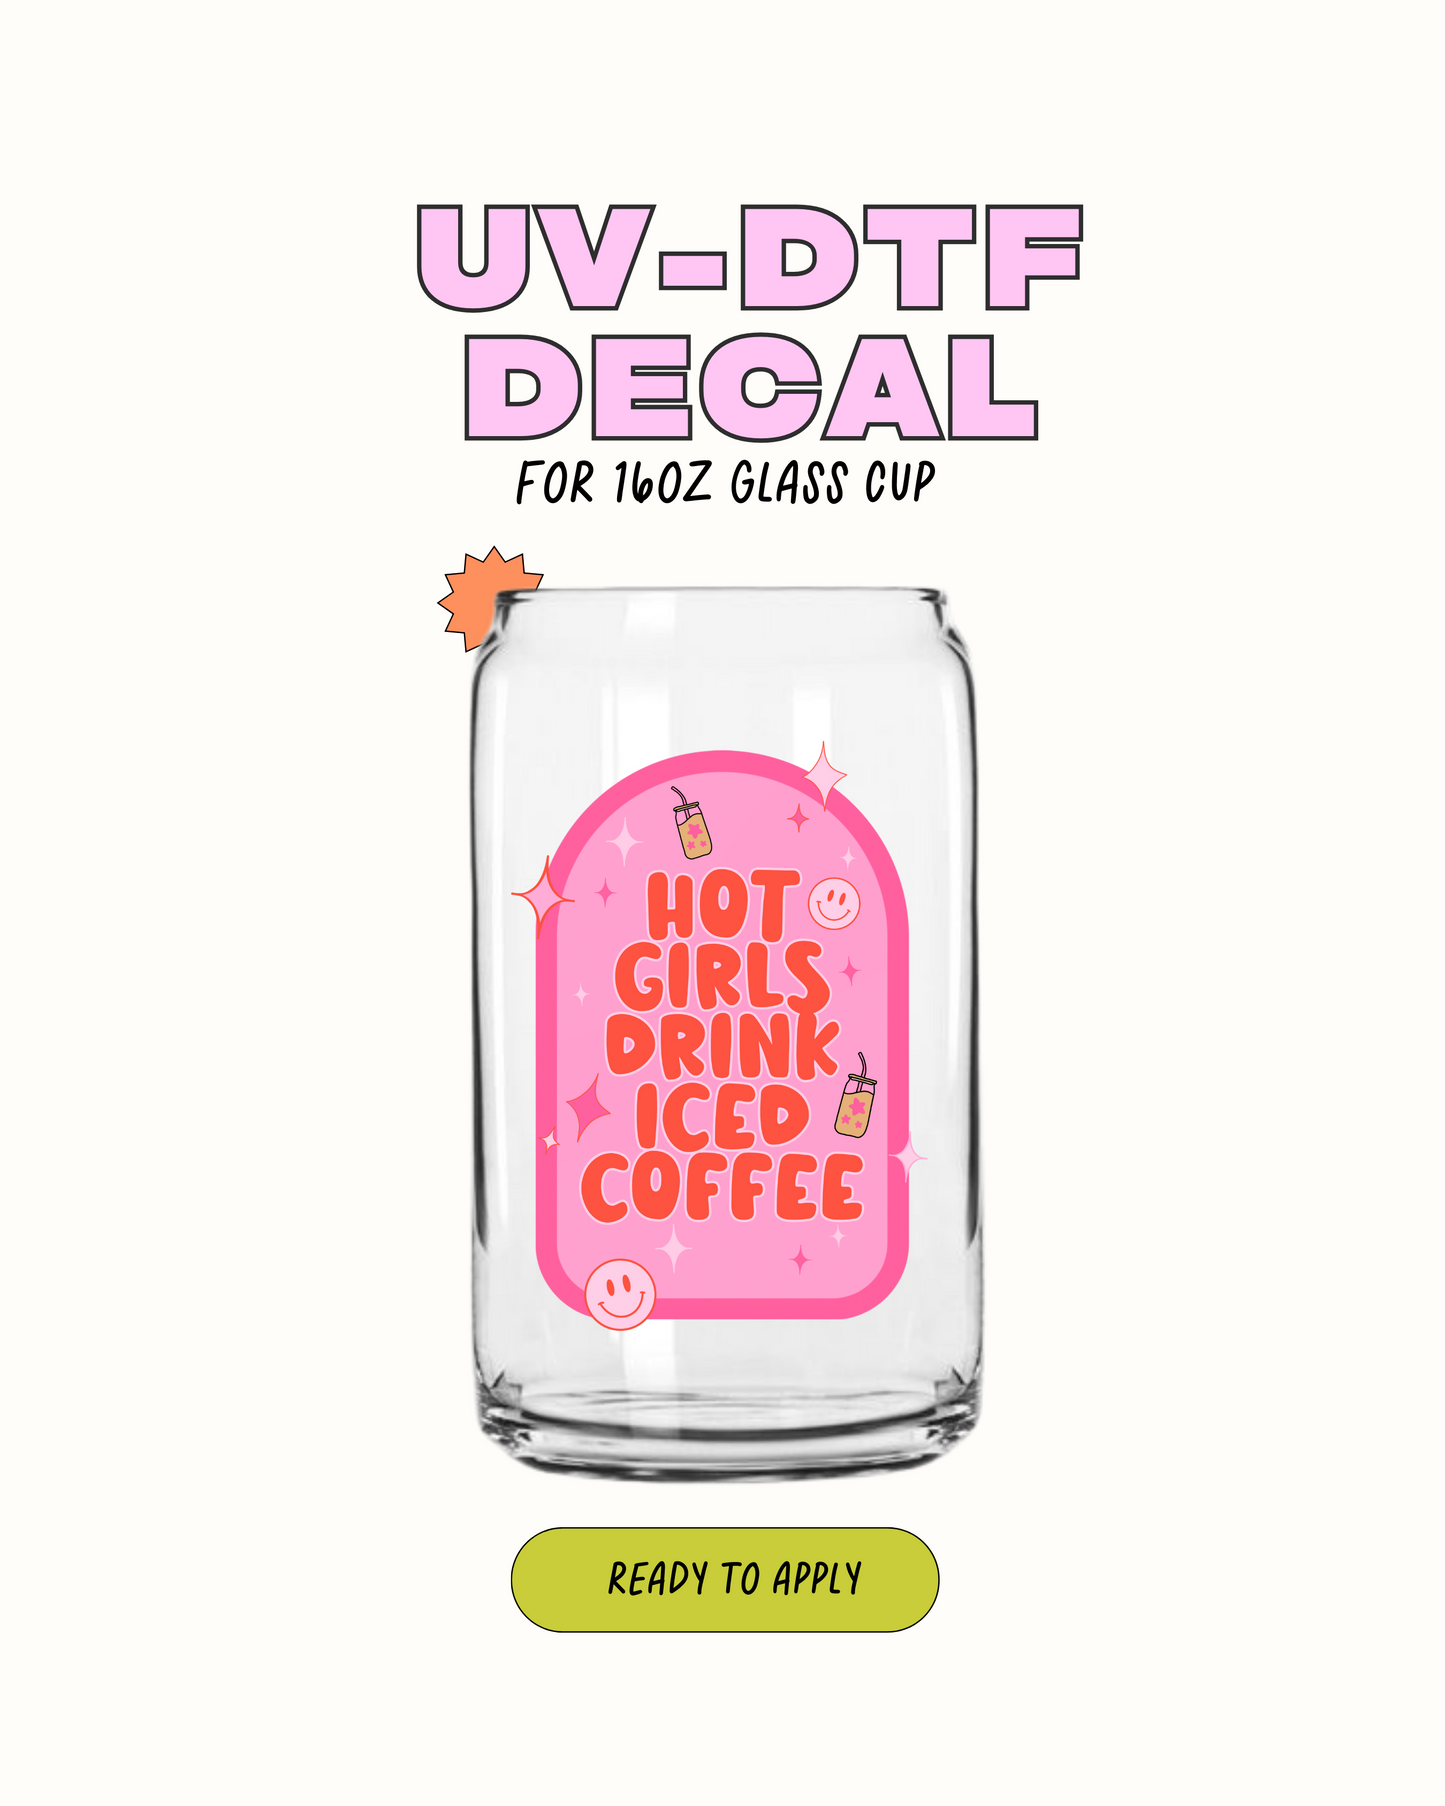 Hot girls Drink iced coffee - UVDTF